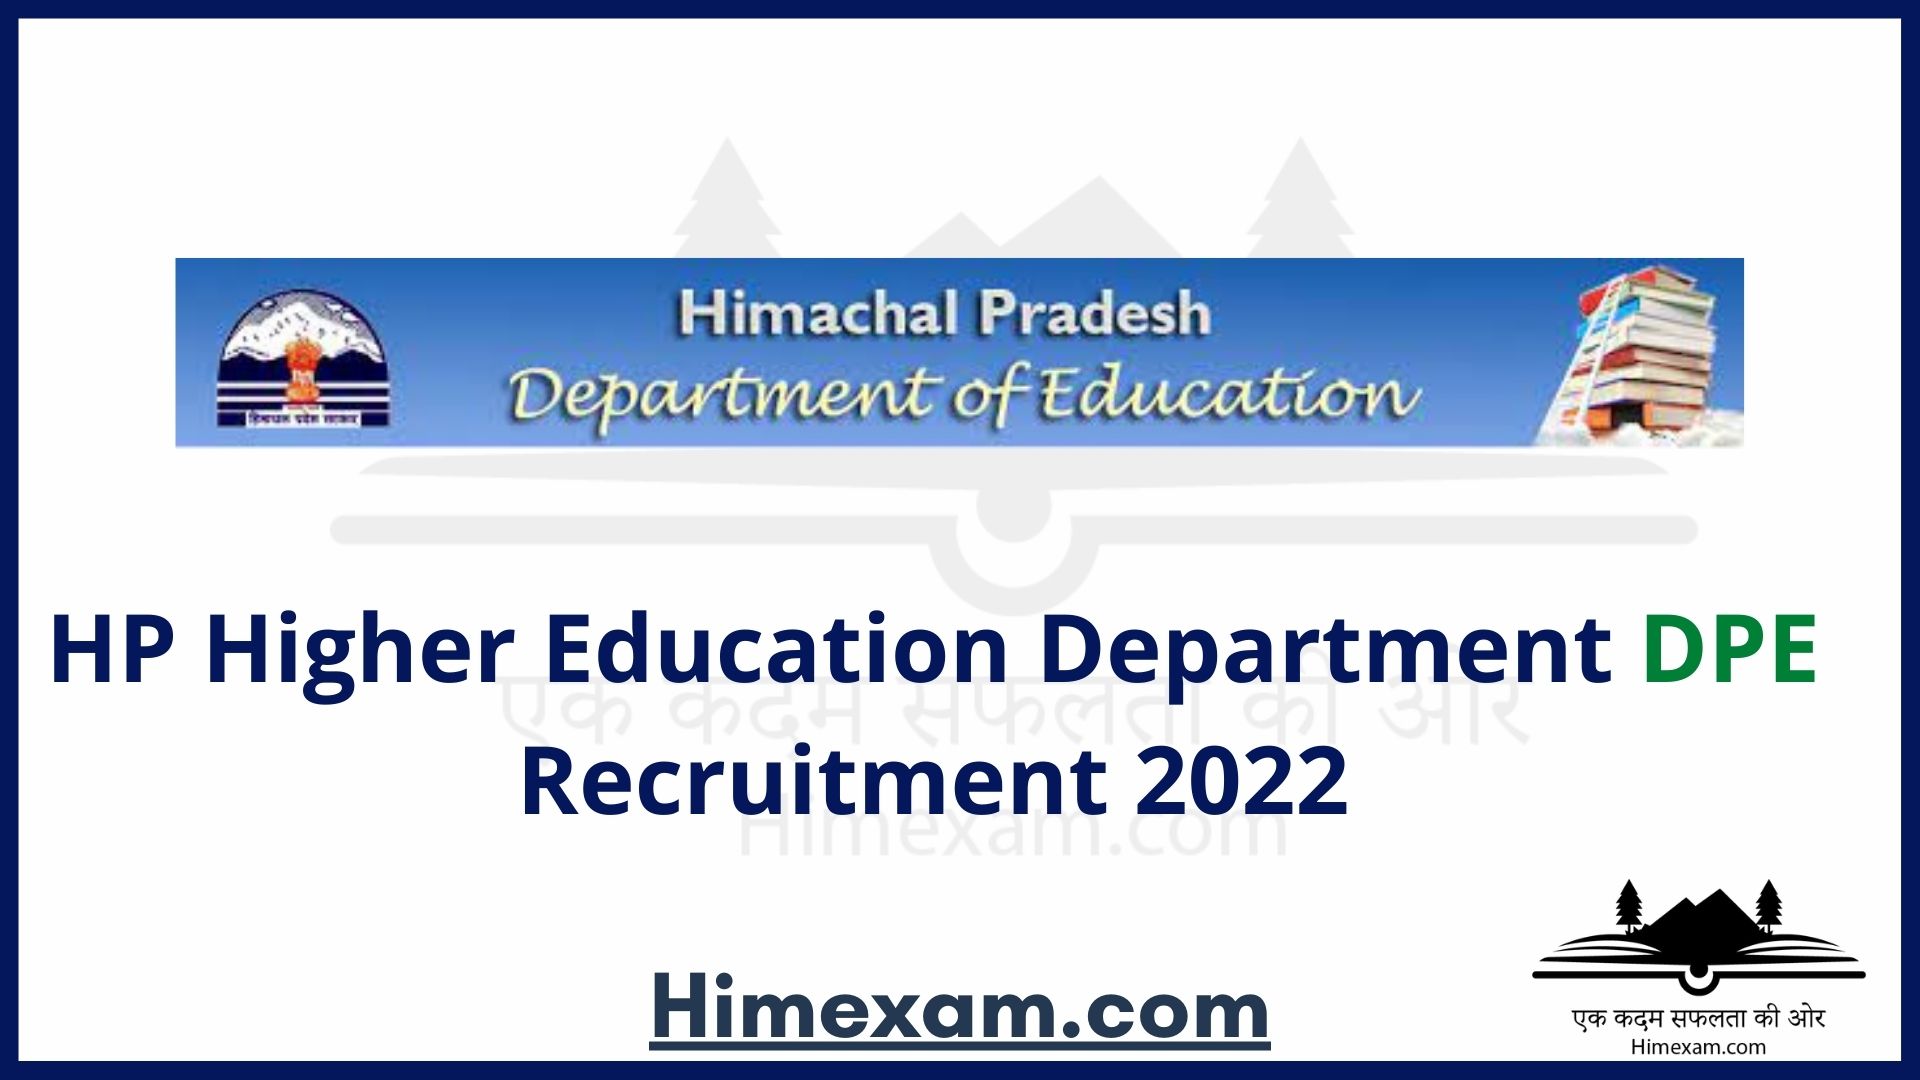 HP Higher Education Department DPE Recruitment 2022